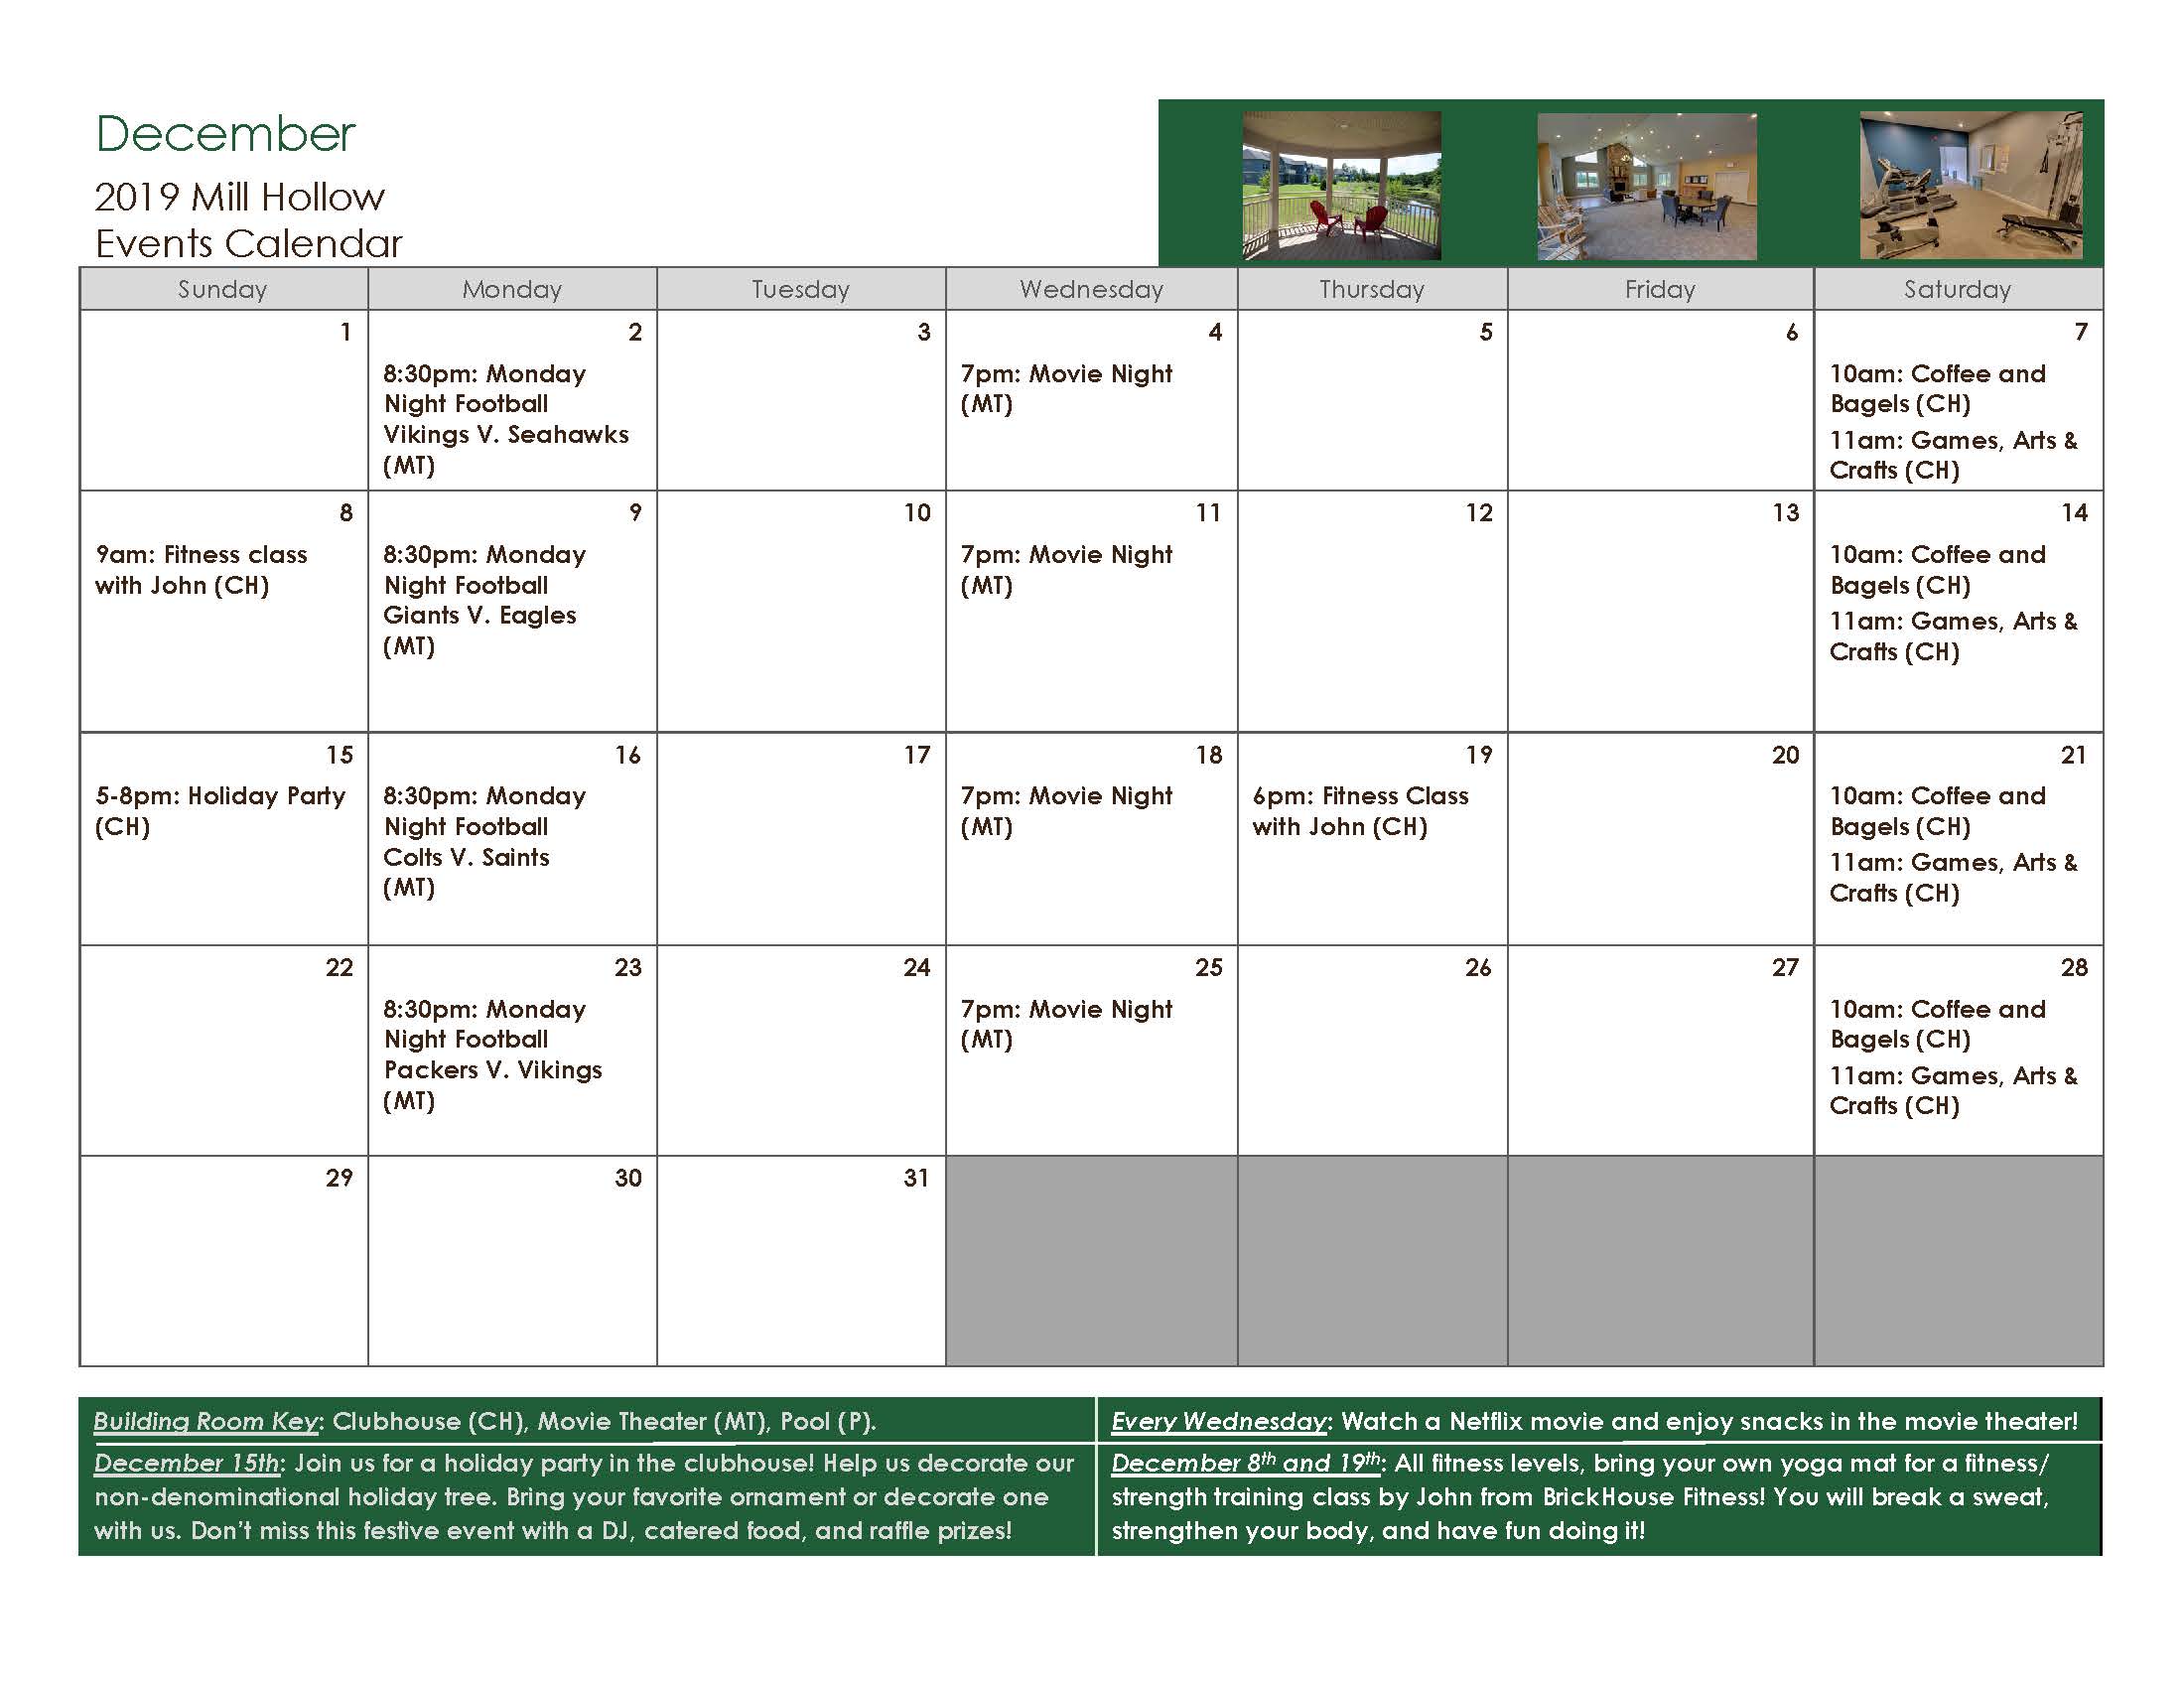 December Event Calendar Sunrise Management and Consulting